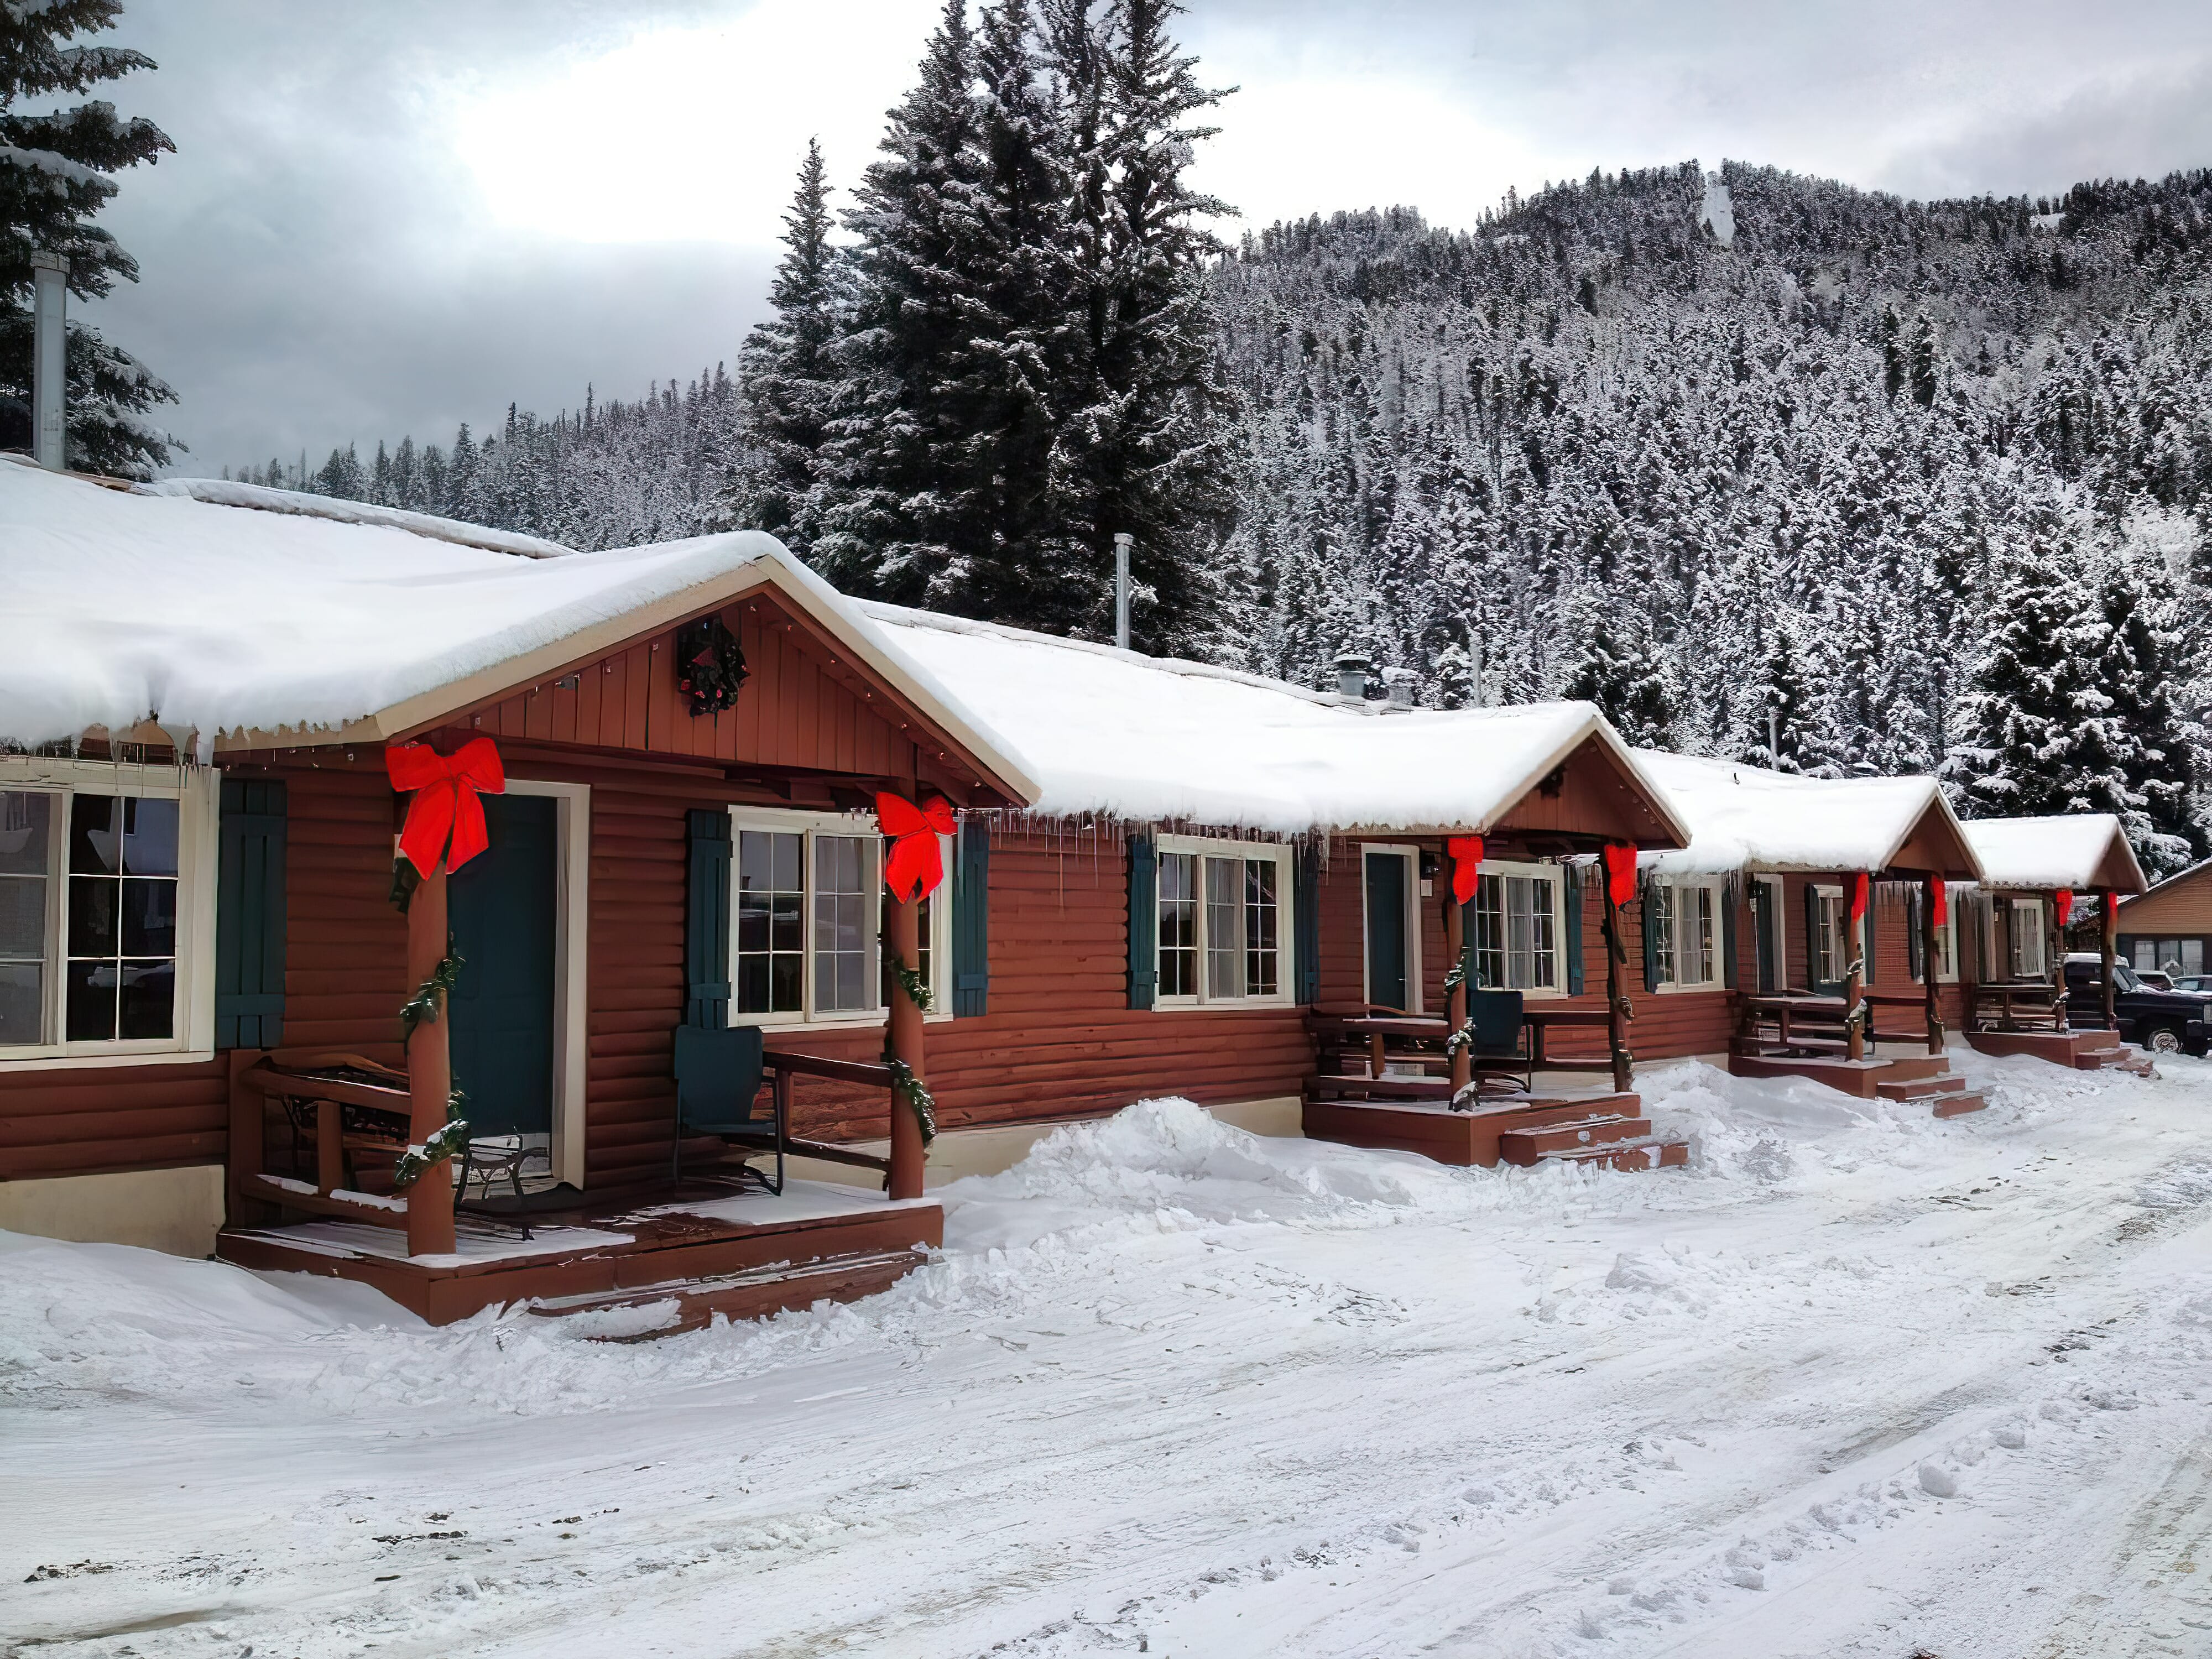 Building view of Three Bear Lodge